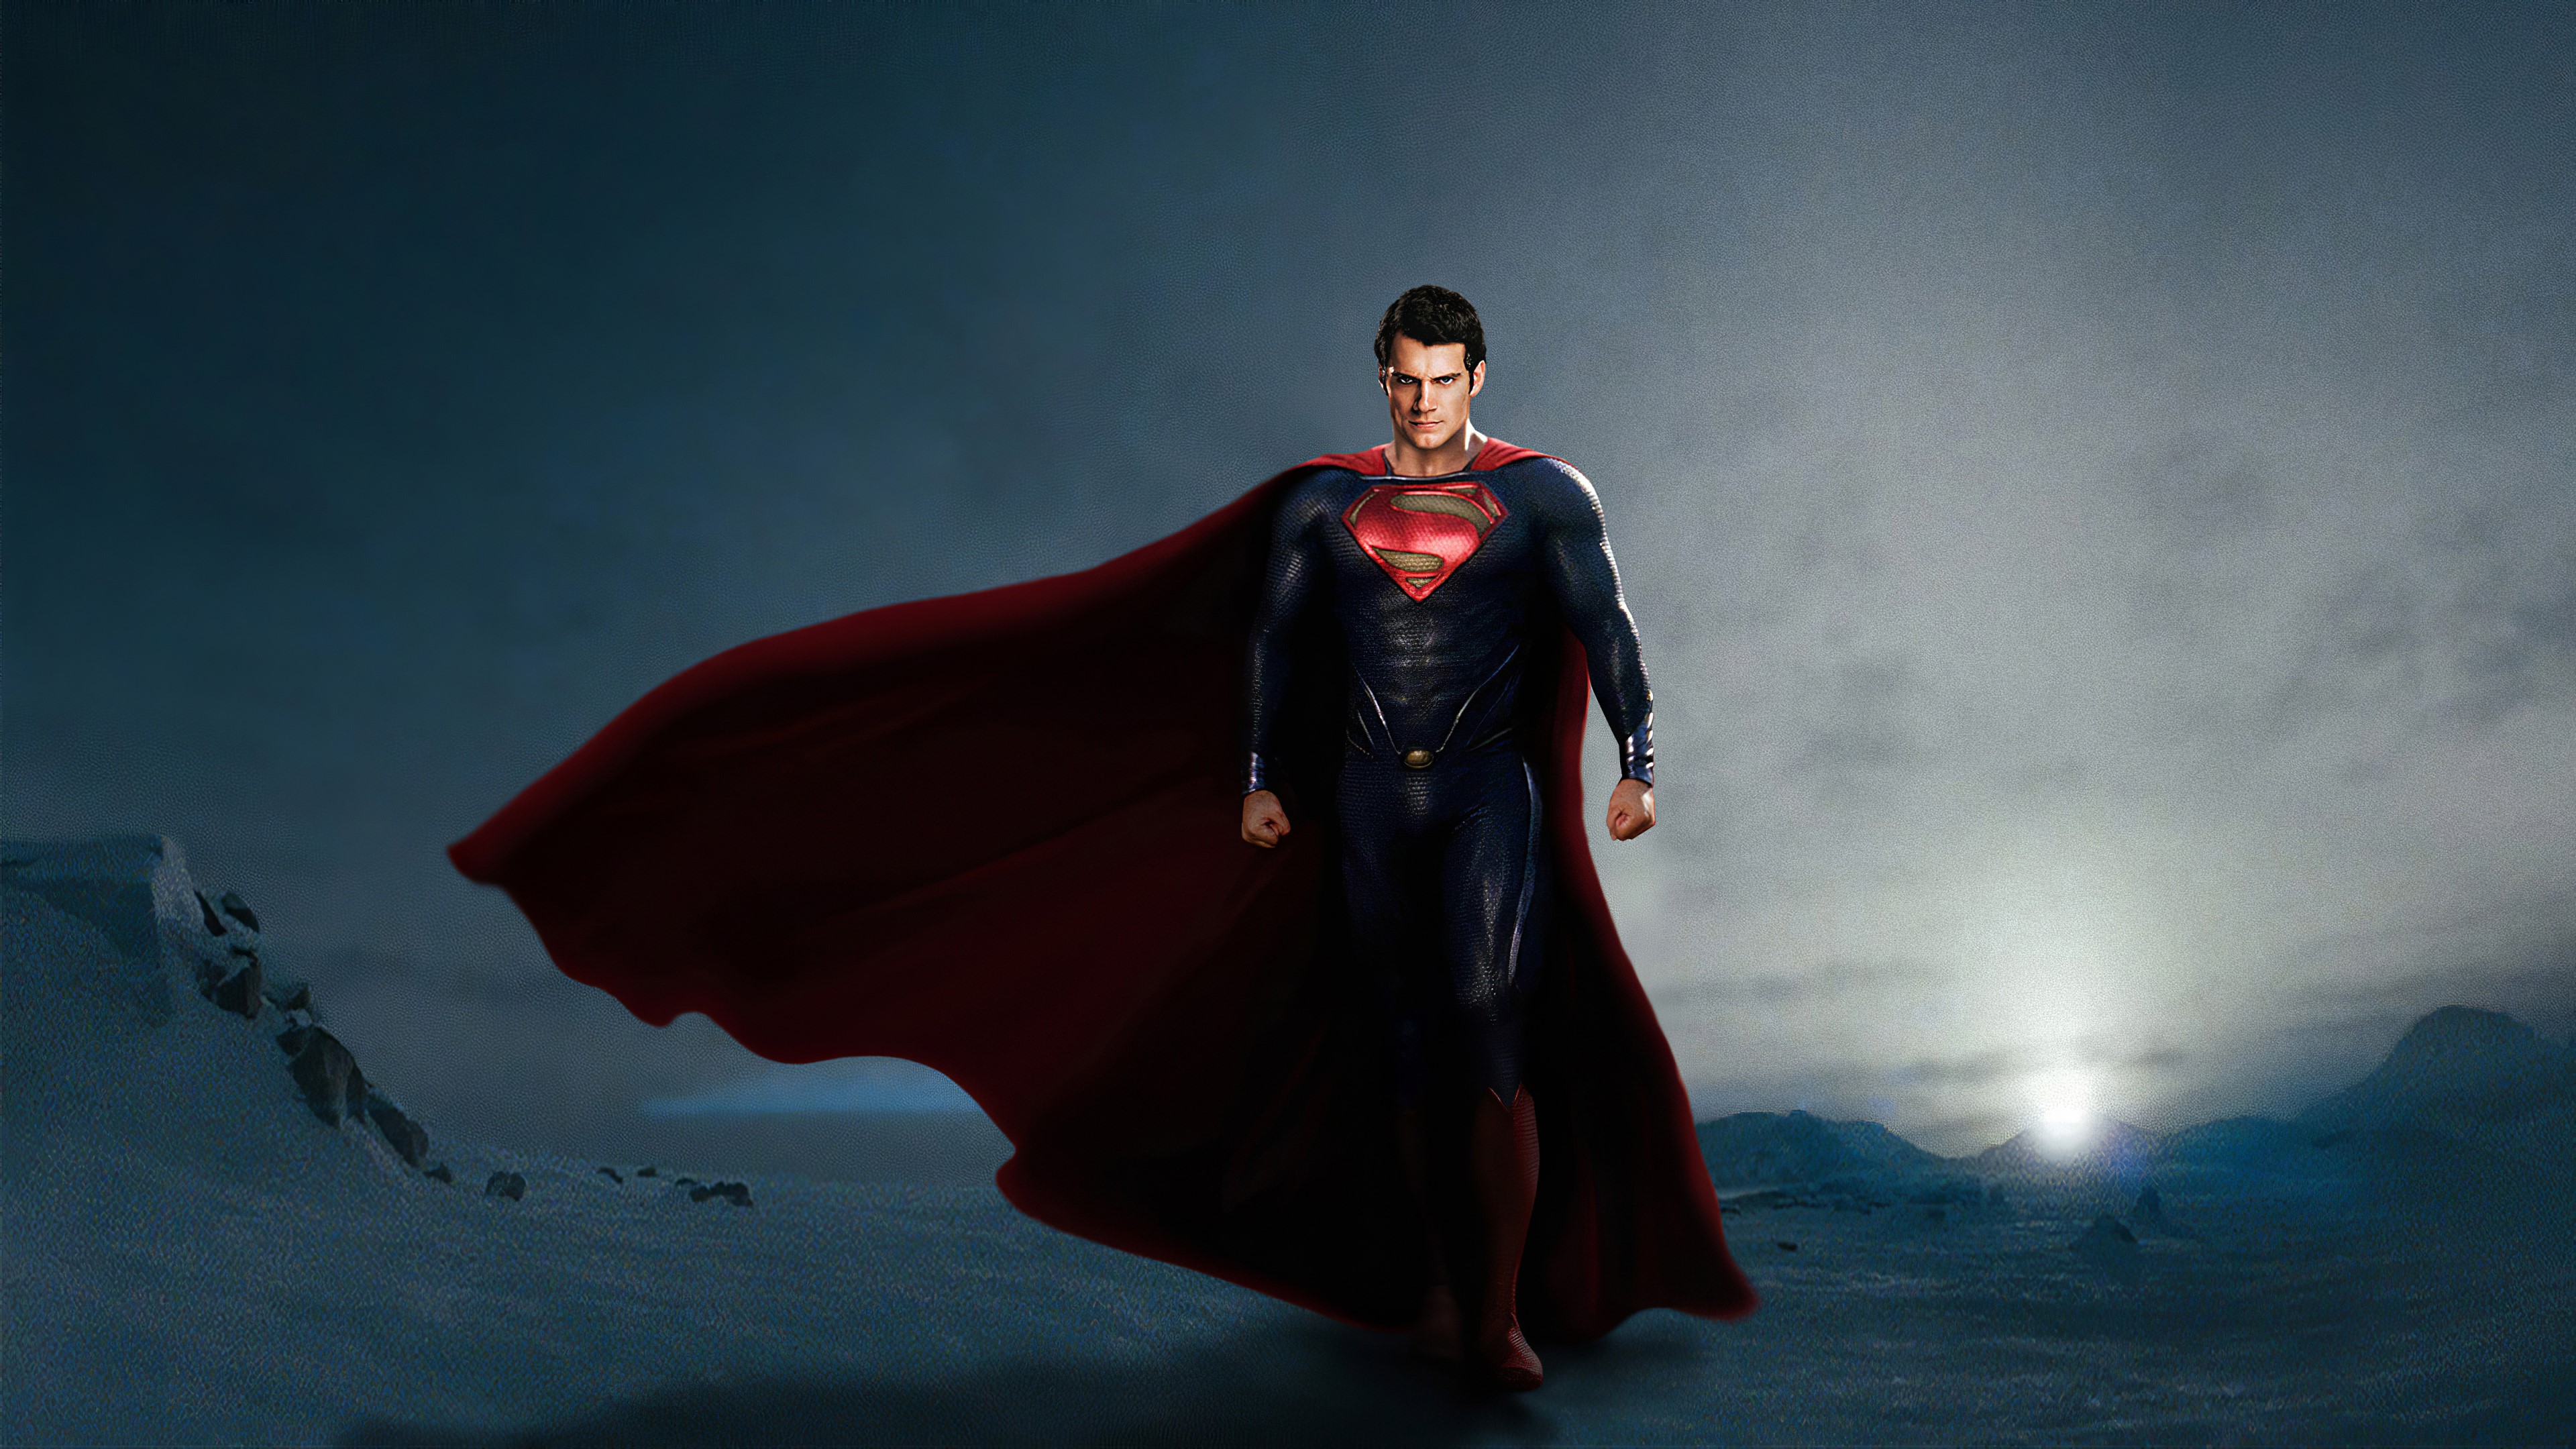 HD desktop wallpaper Superman Movie Superhero Justice League Henry  Cavill Zack Snyders Justice League download free picture 1182009